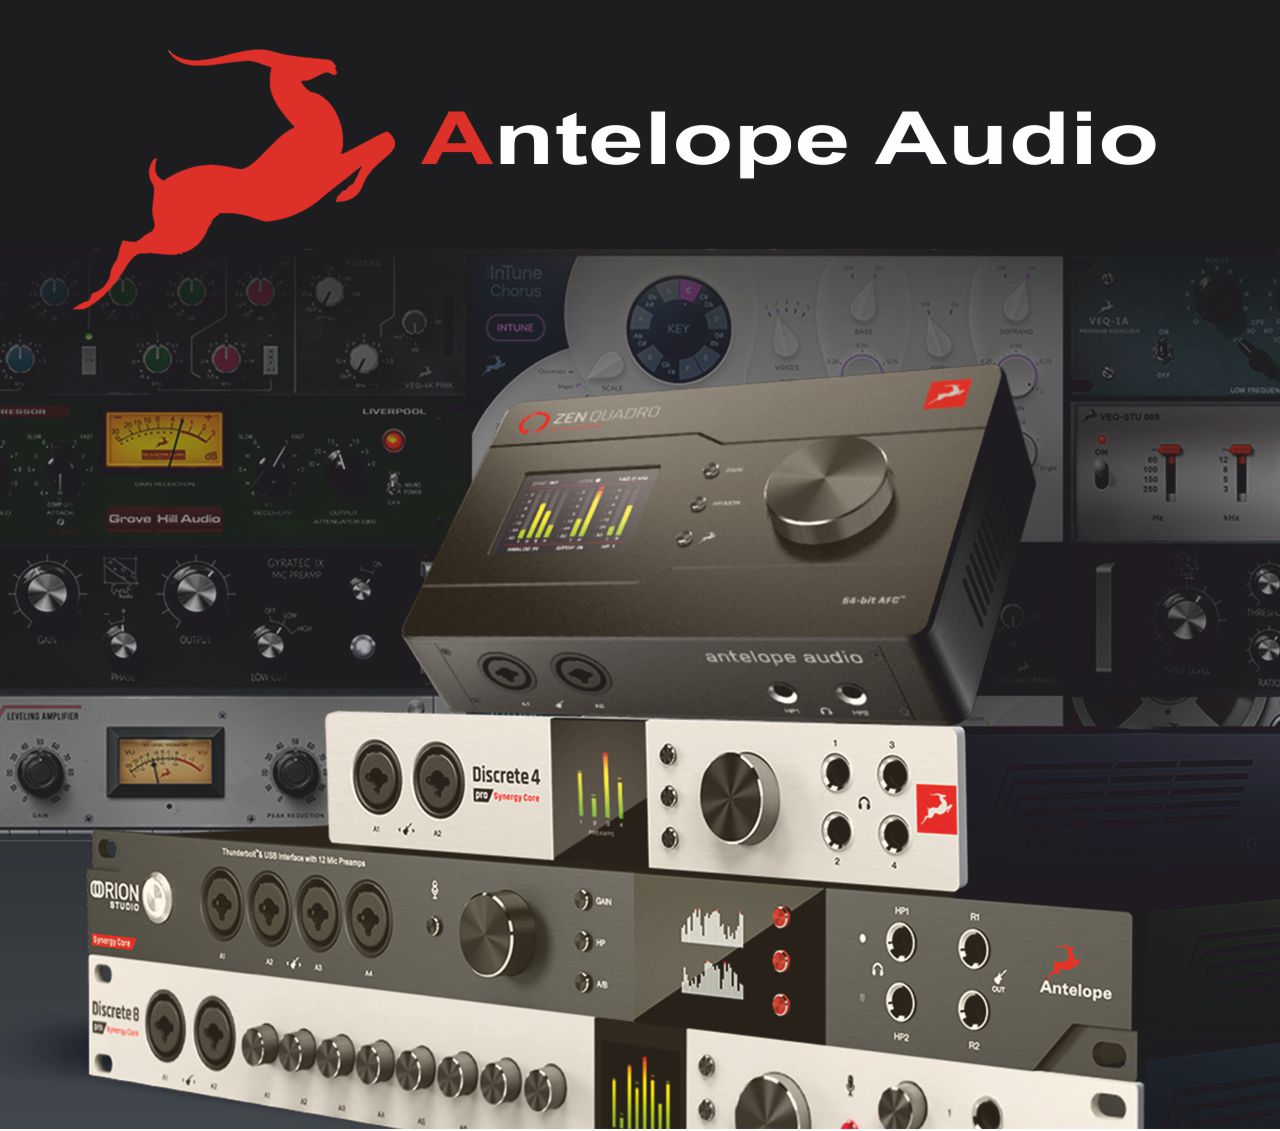 Ofertas Antelope Audio Noticia